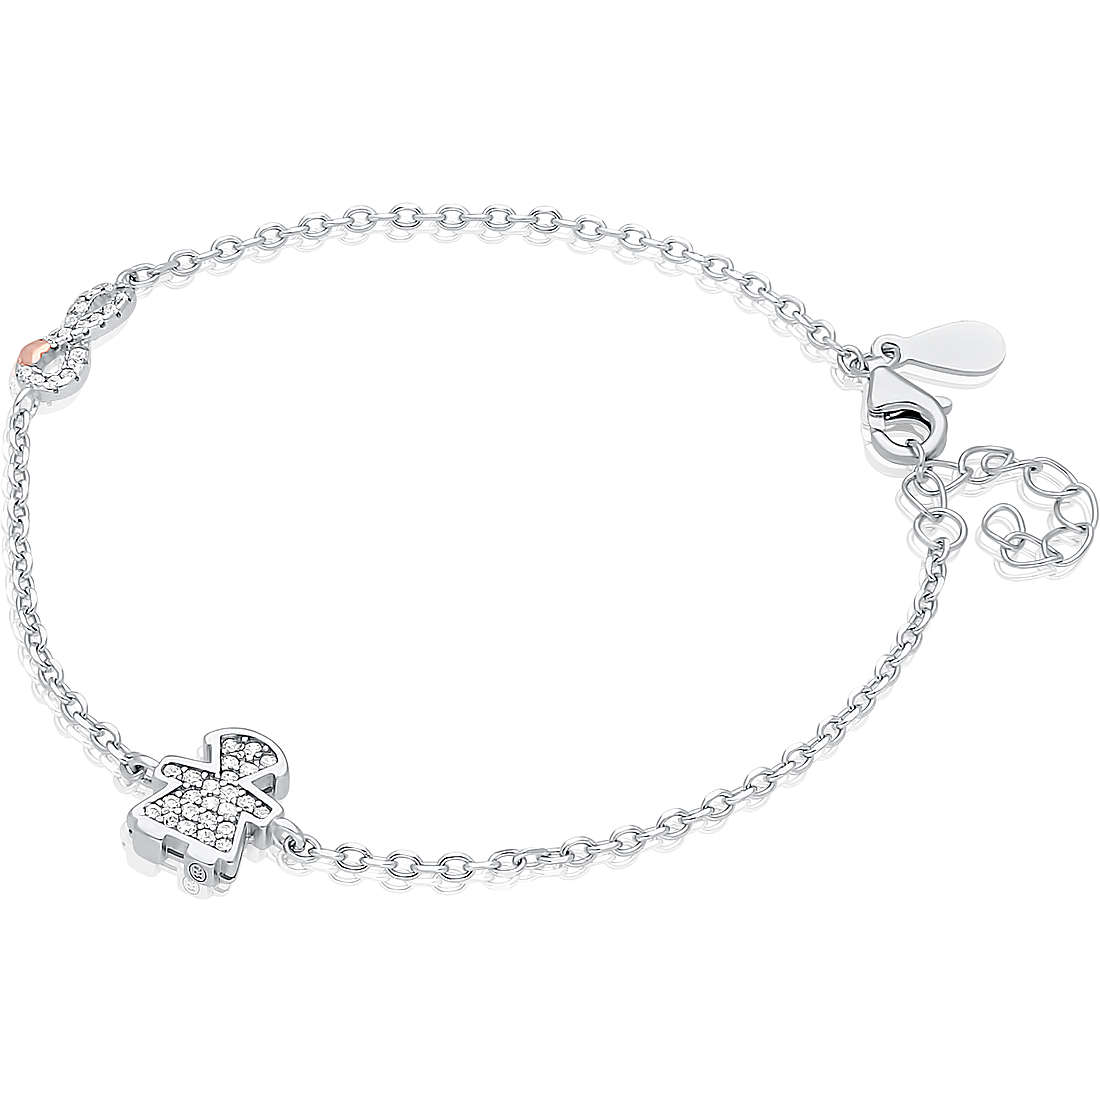 bracelet woman Chain 925 Silver jewel GioiaPura INS028BR313RHWH